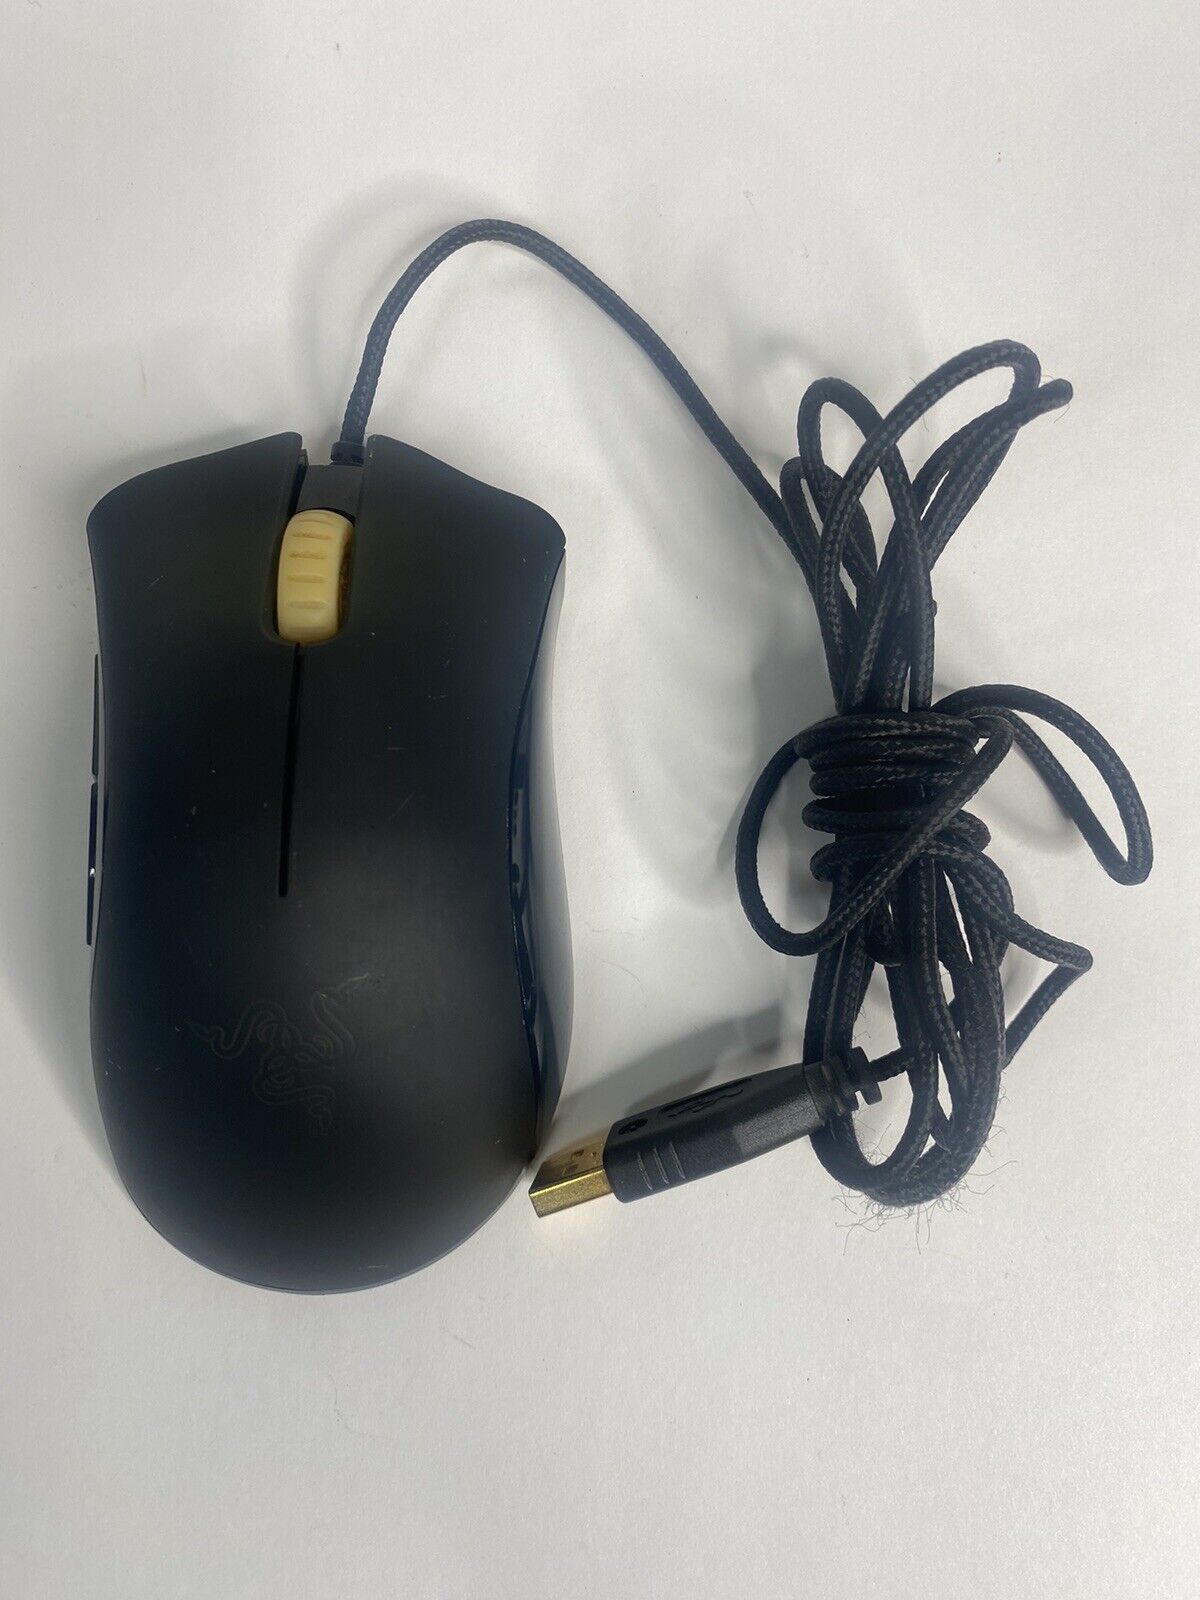 Razer DeathAdder 3500dpi 3.5G Infrared Gaming USB Wired Mouse RZ01-0015